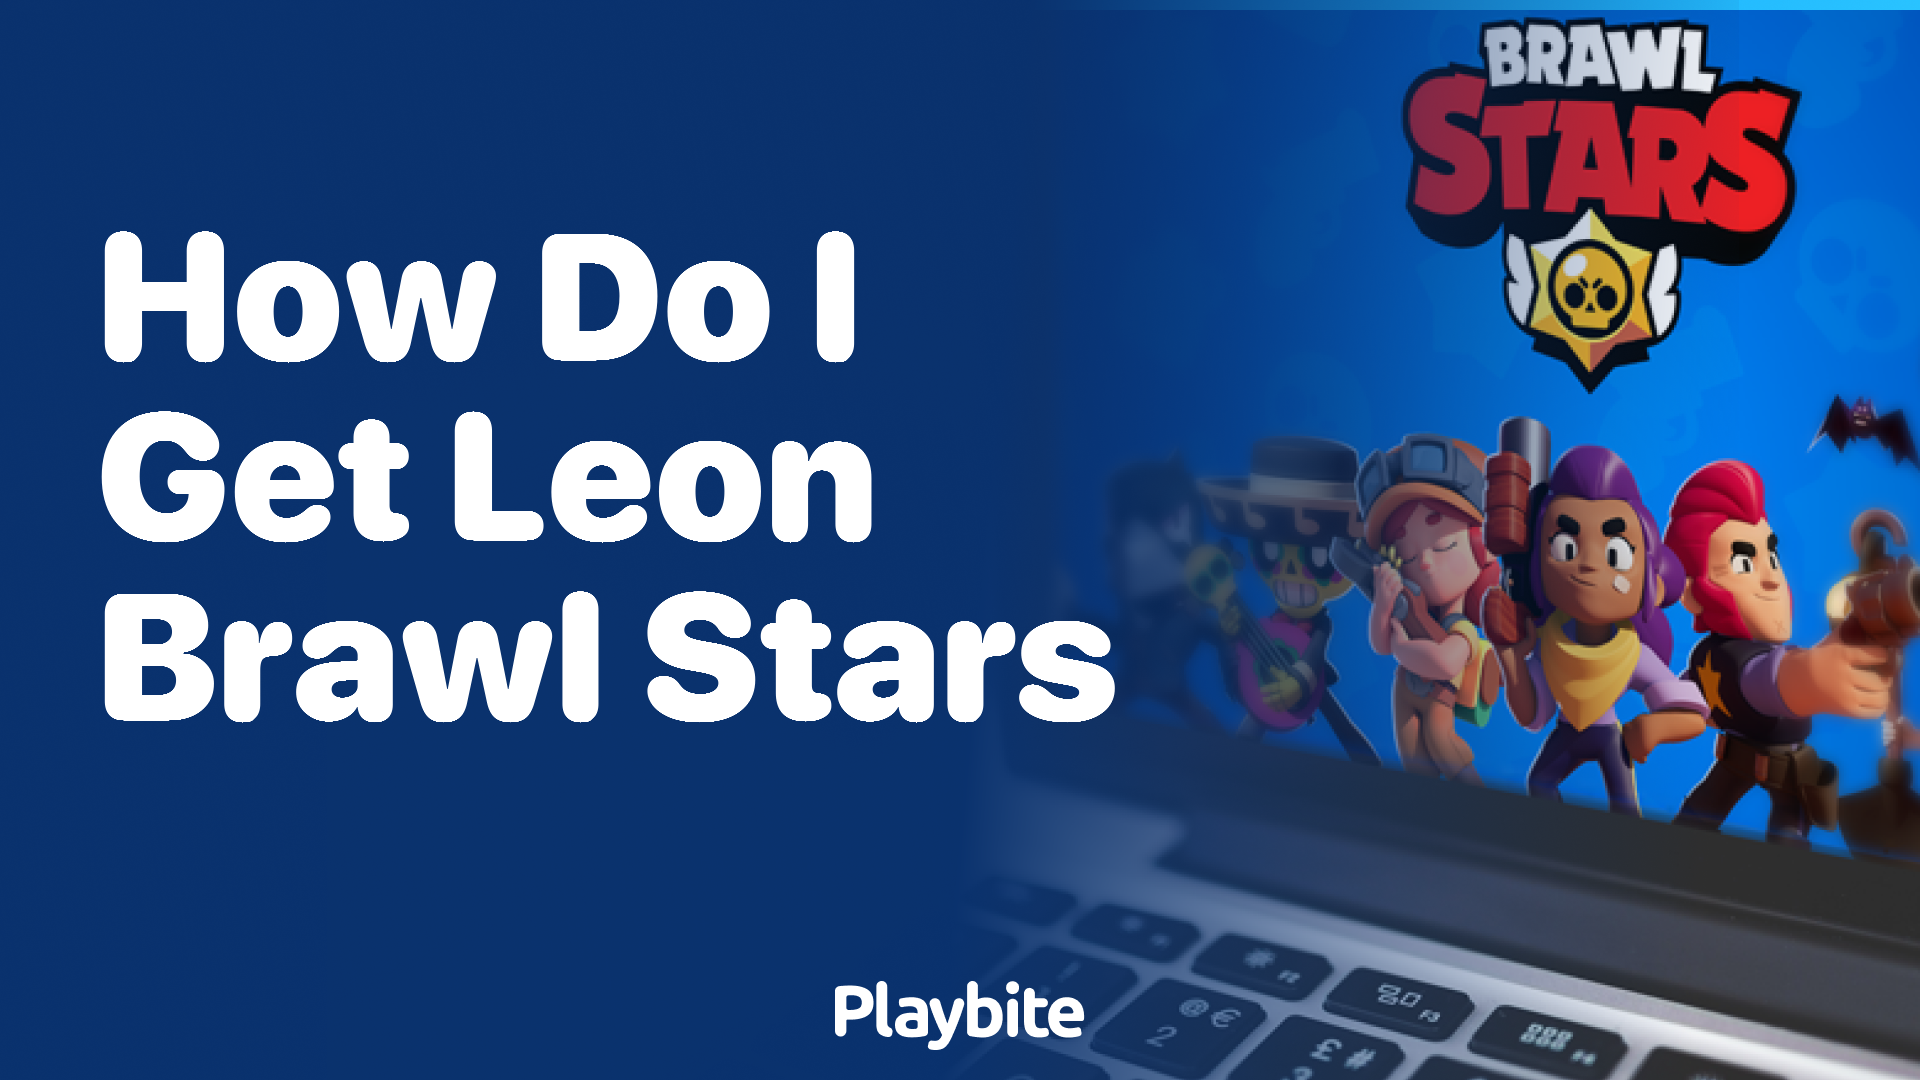 How Do I Get Leon in Brawl Stars? - Playbite